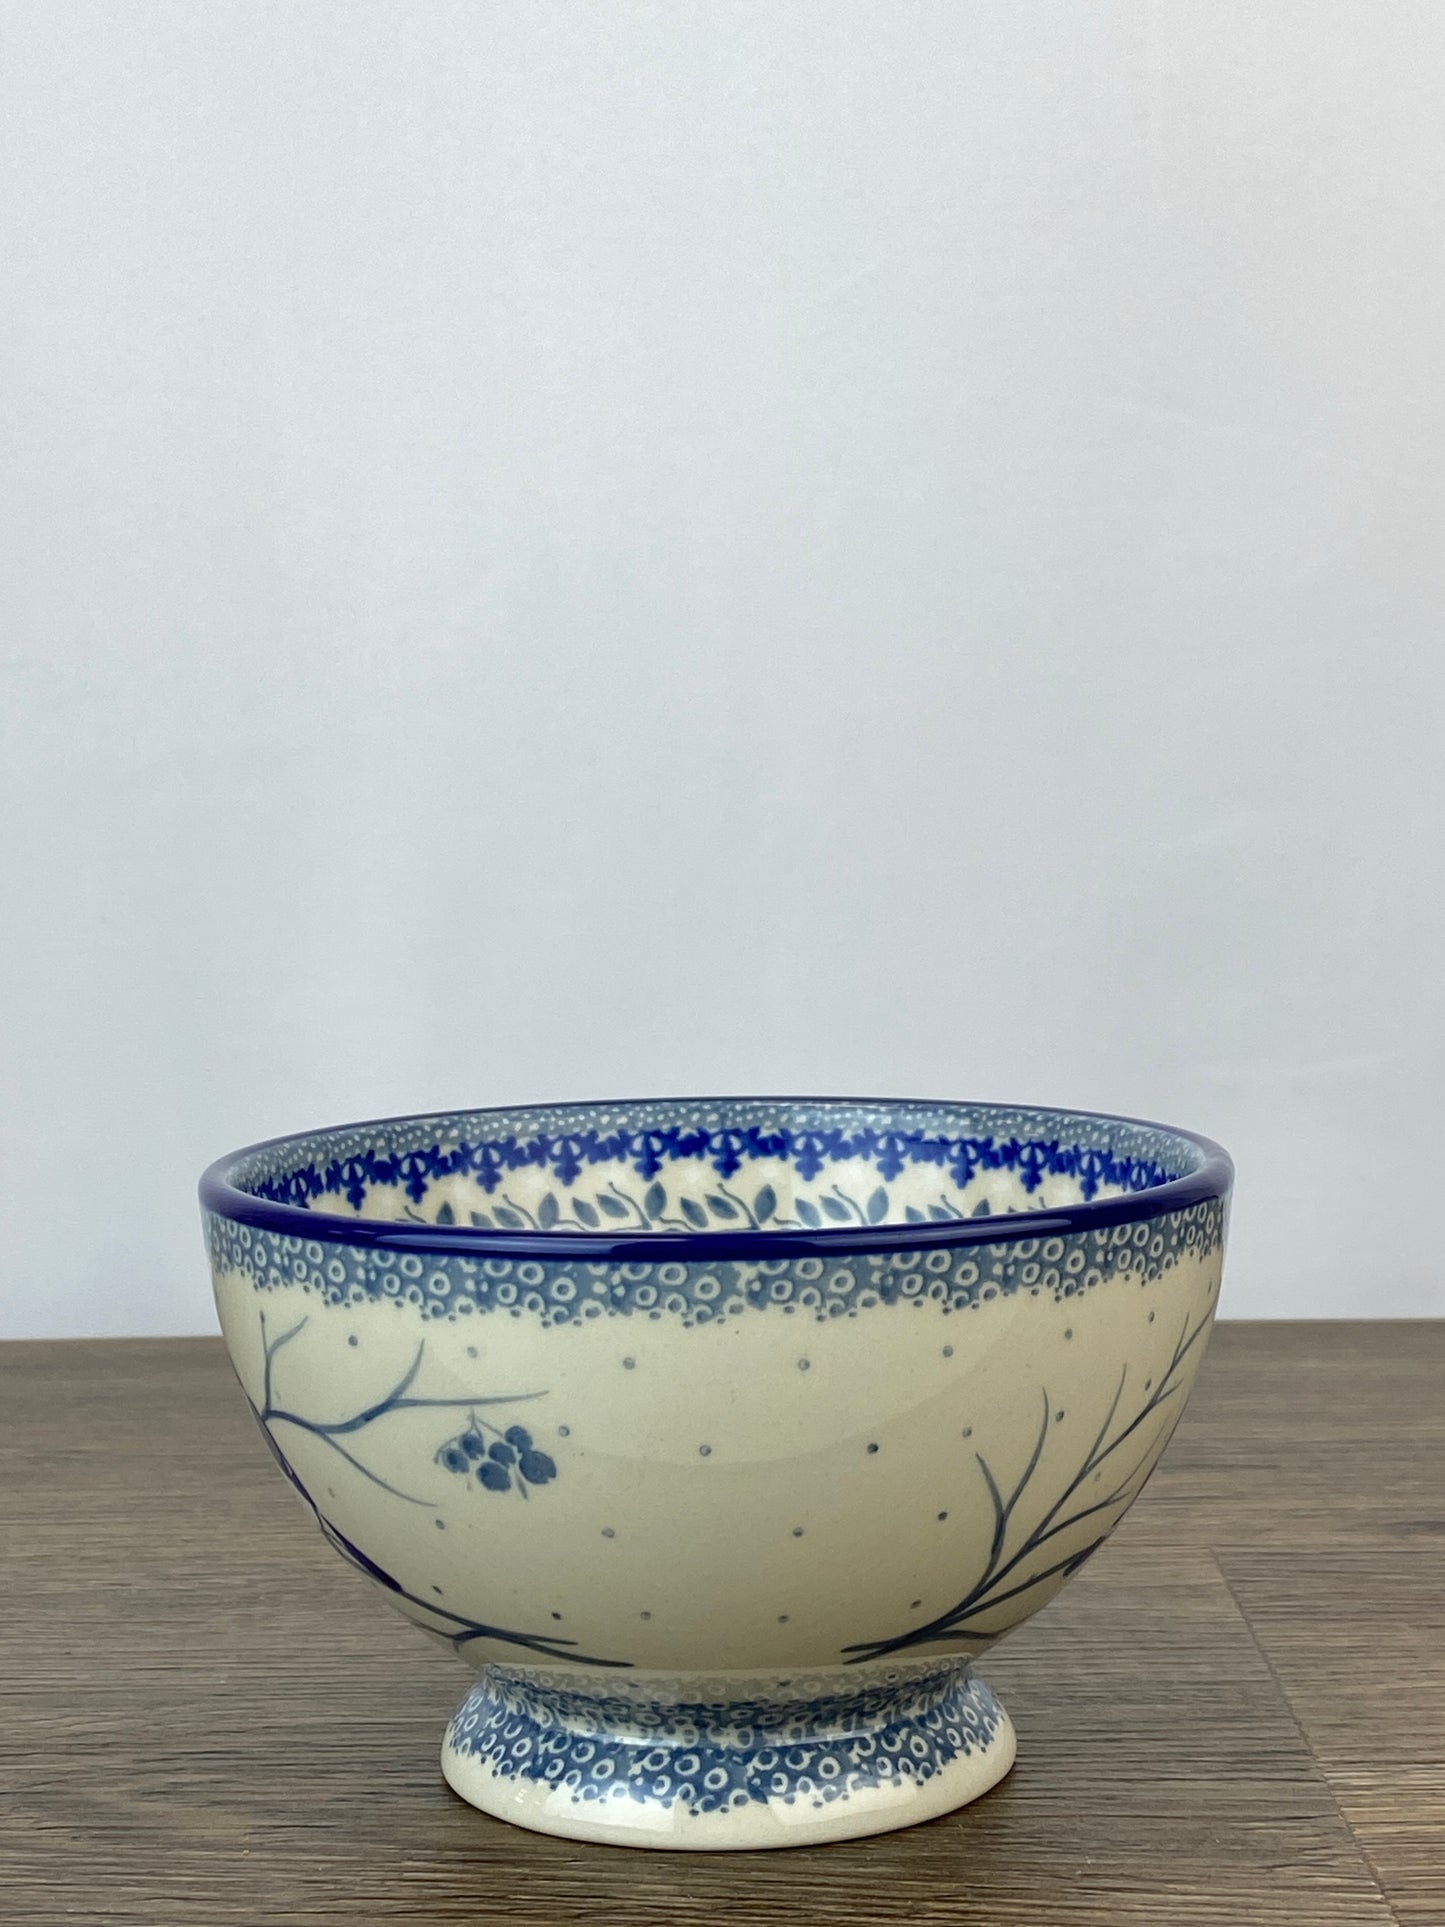 Unikat Pedestal Bowl - Shape 206 - Pattern U4830